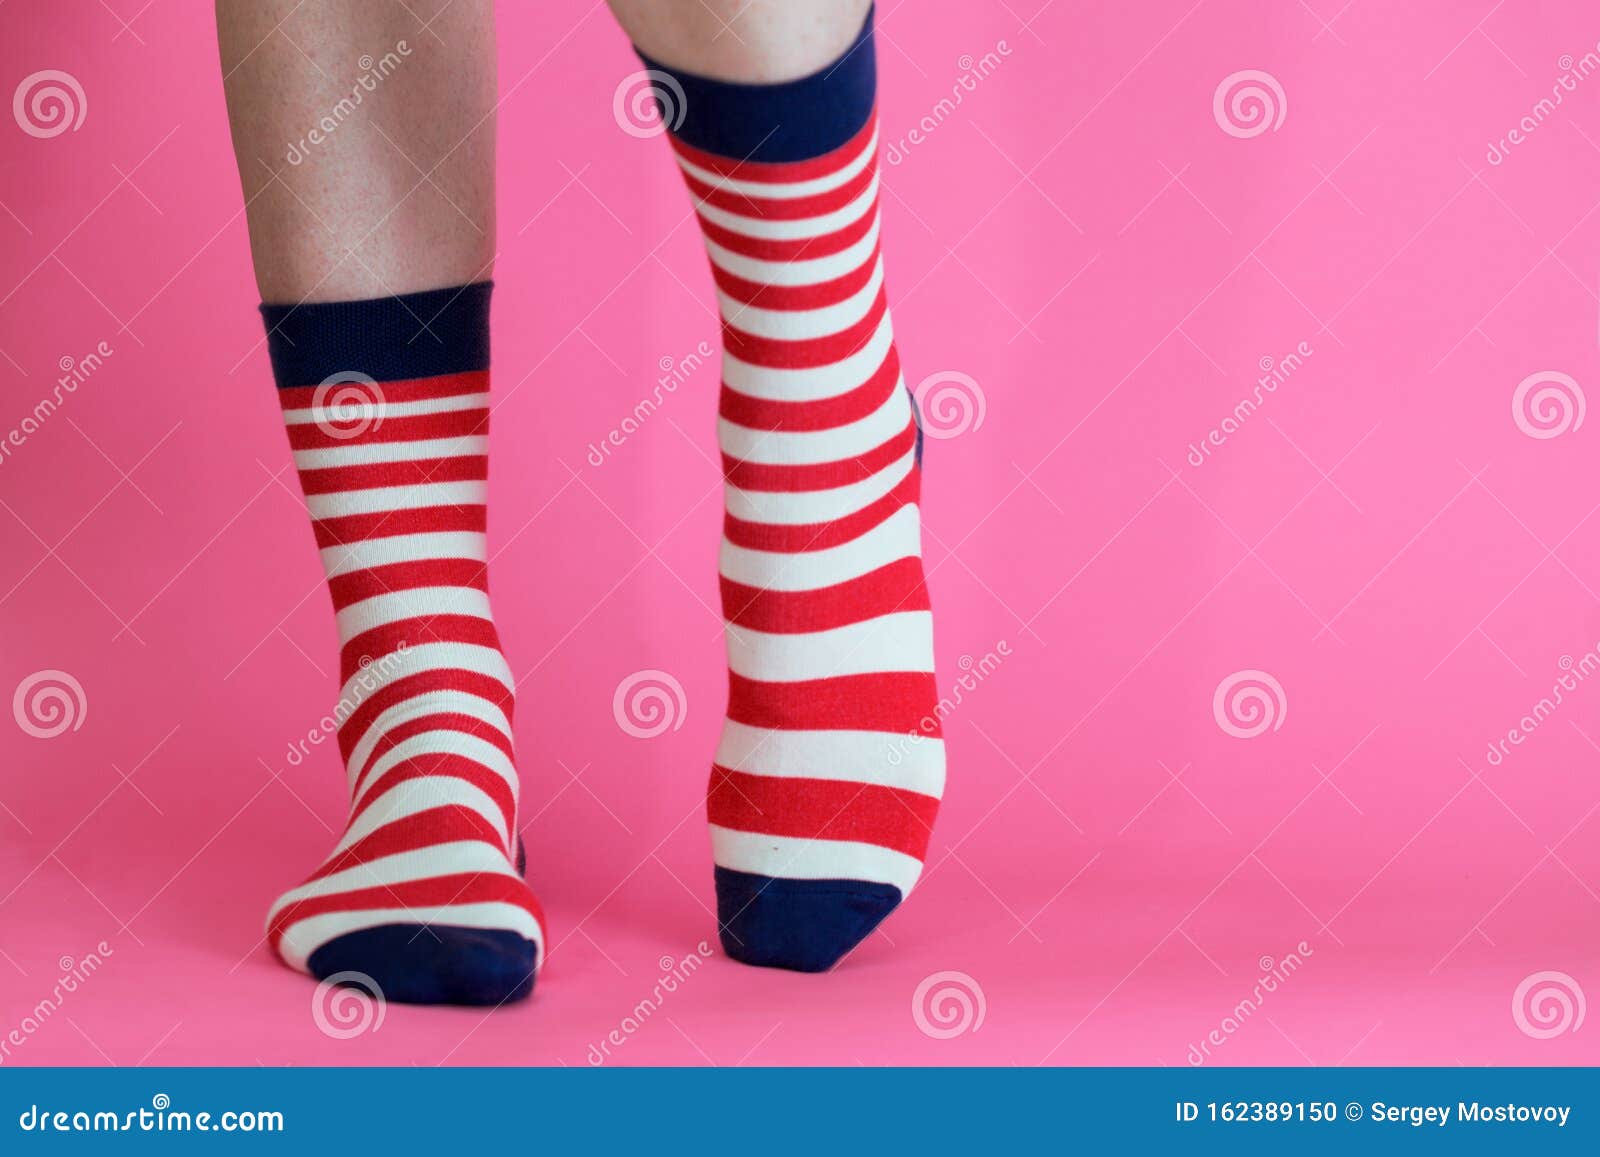 Striped bright socks stock photo. Image of feet, youth - 162389150